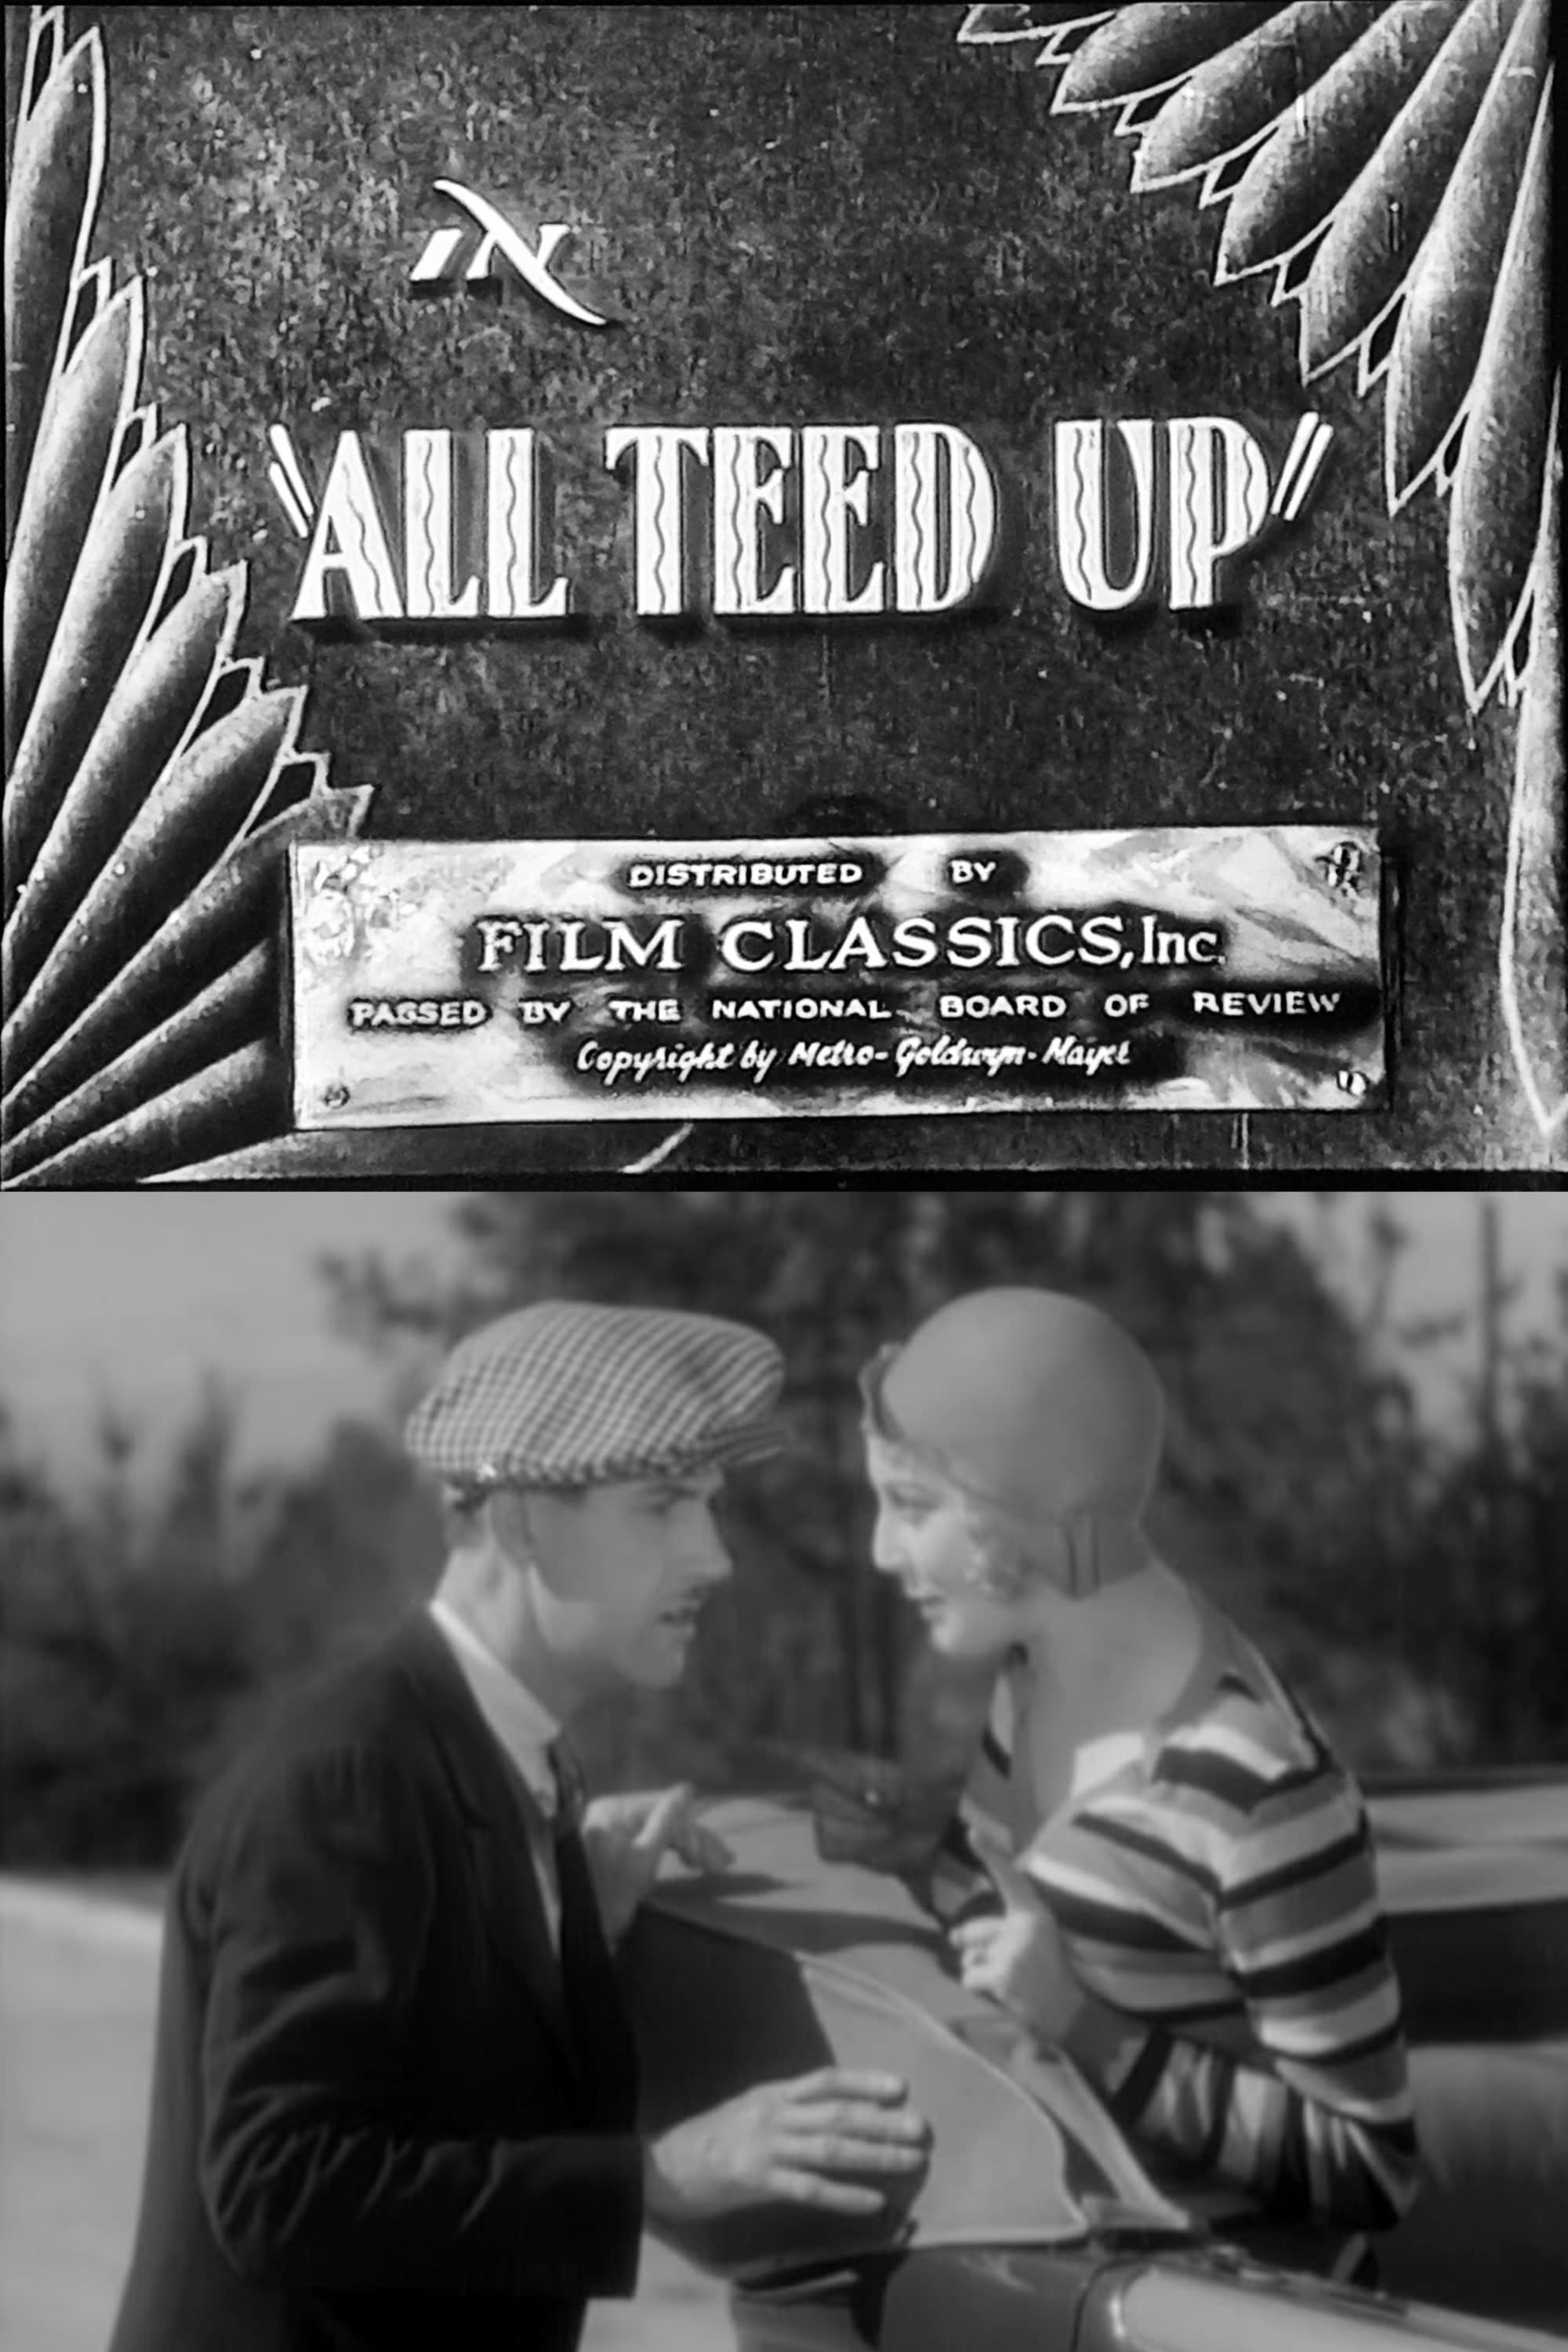 All Teed Up (1930)